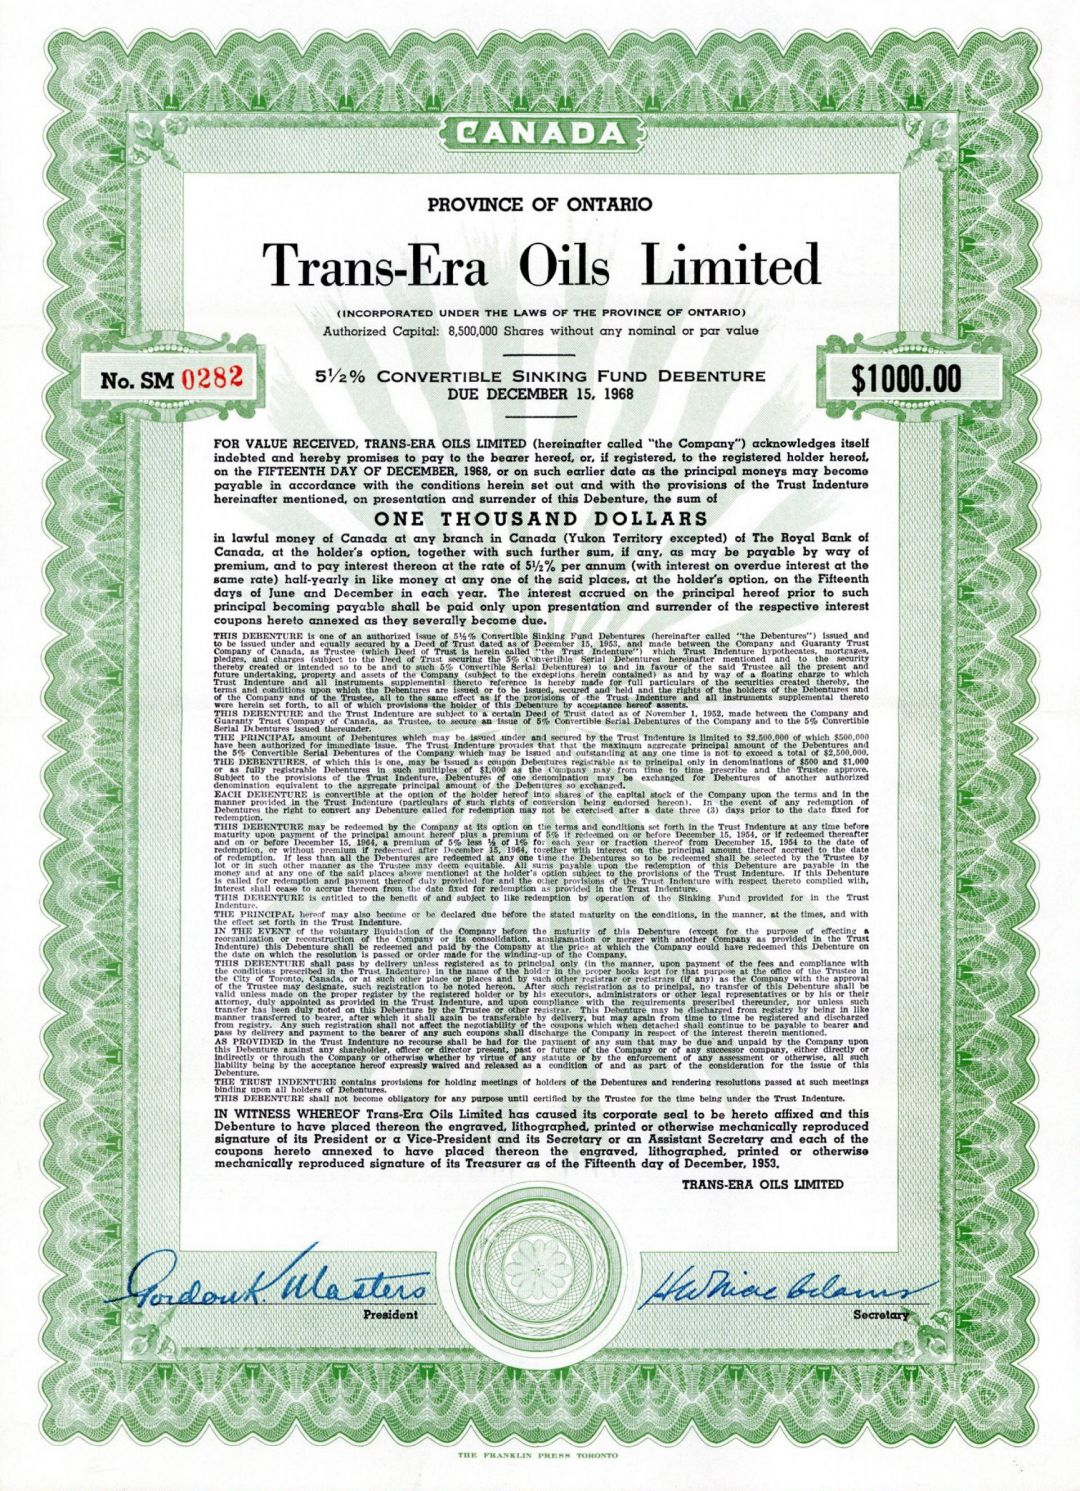 Trans-Era Oils Limited - $1,000 Bond